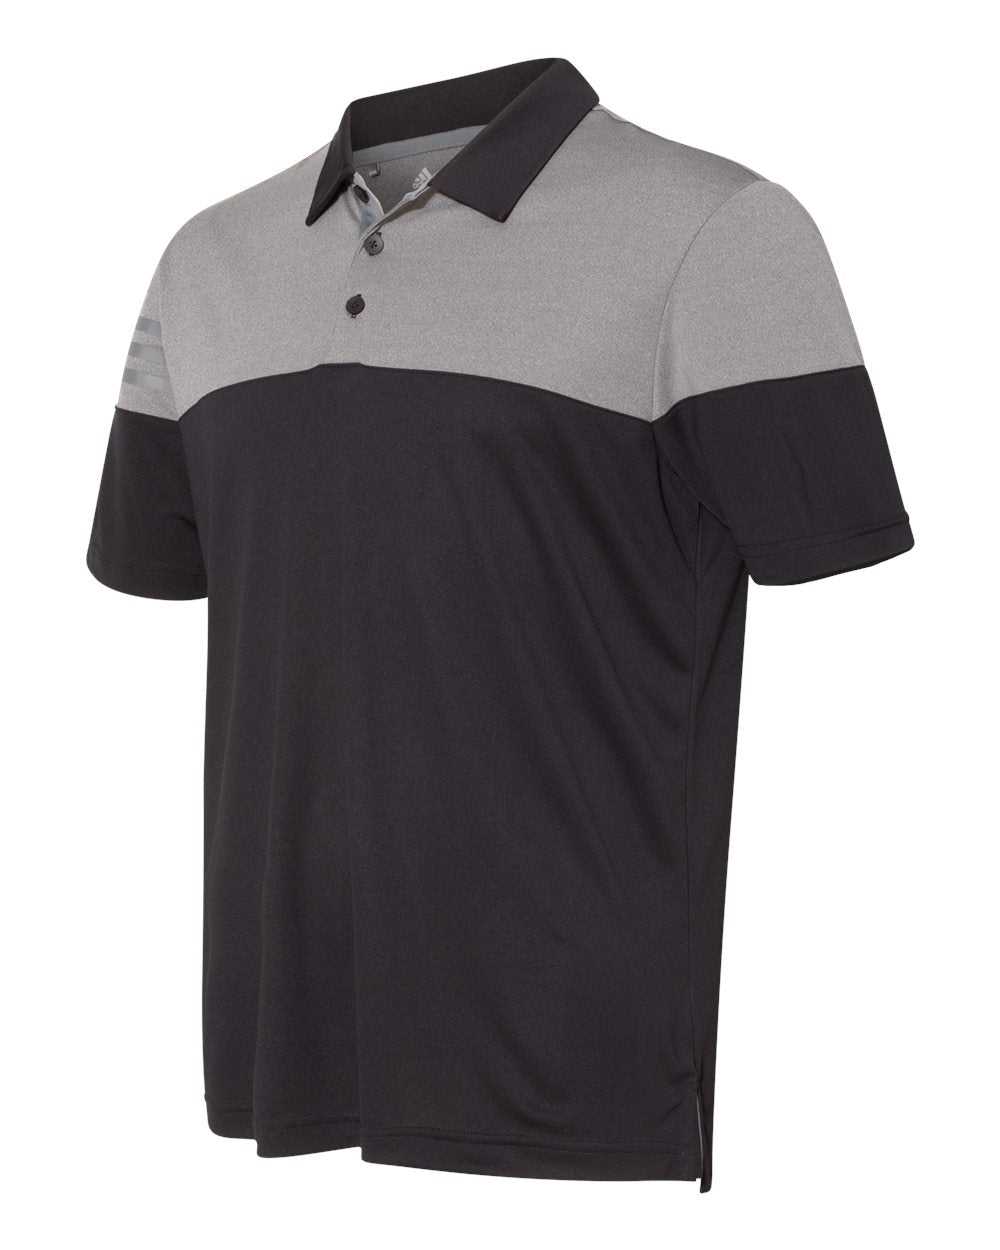 Adidas A213 Heathered 3-Stripes Block Sport Shirt - Black Vista Grey - HIT a Double